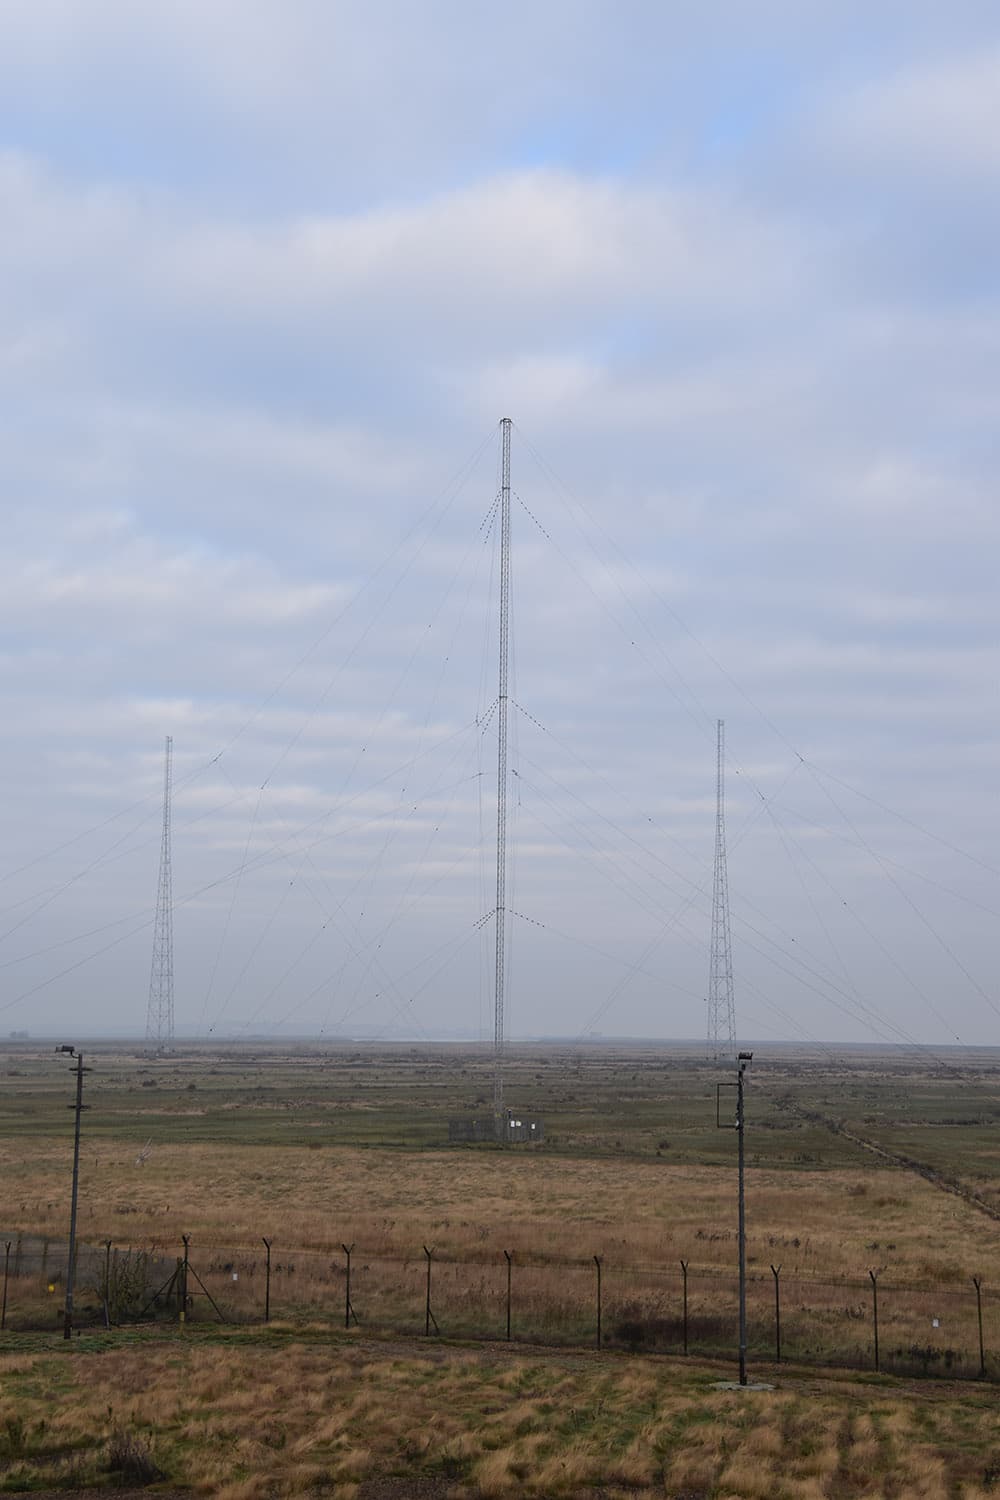 Radio Caroline mast in the foreground at Orfordness.